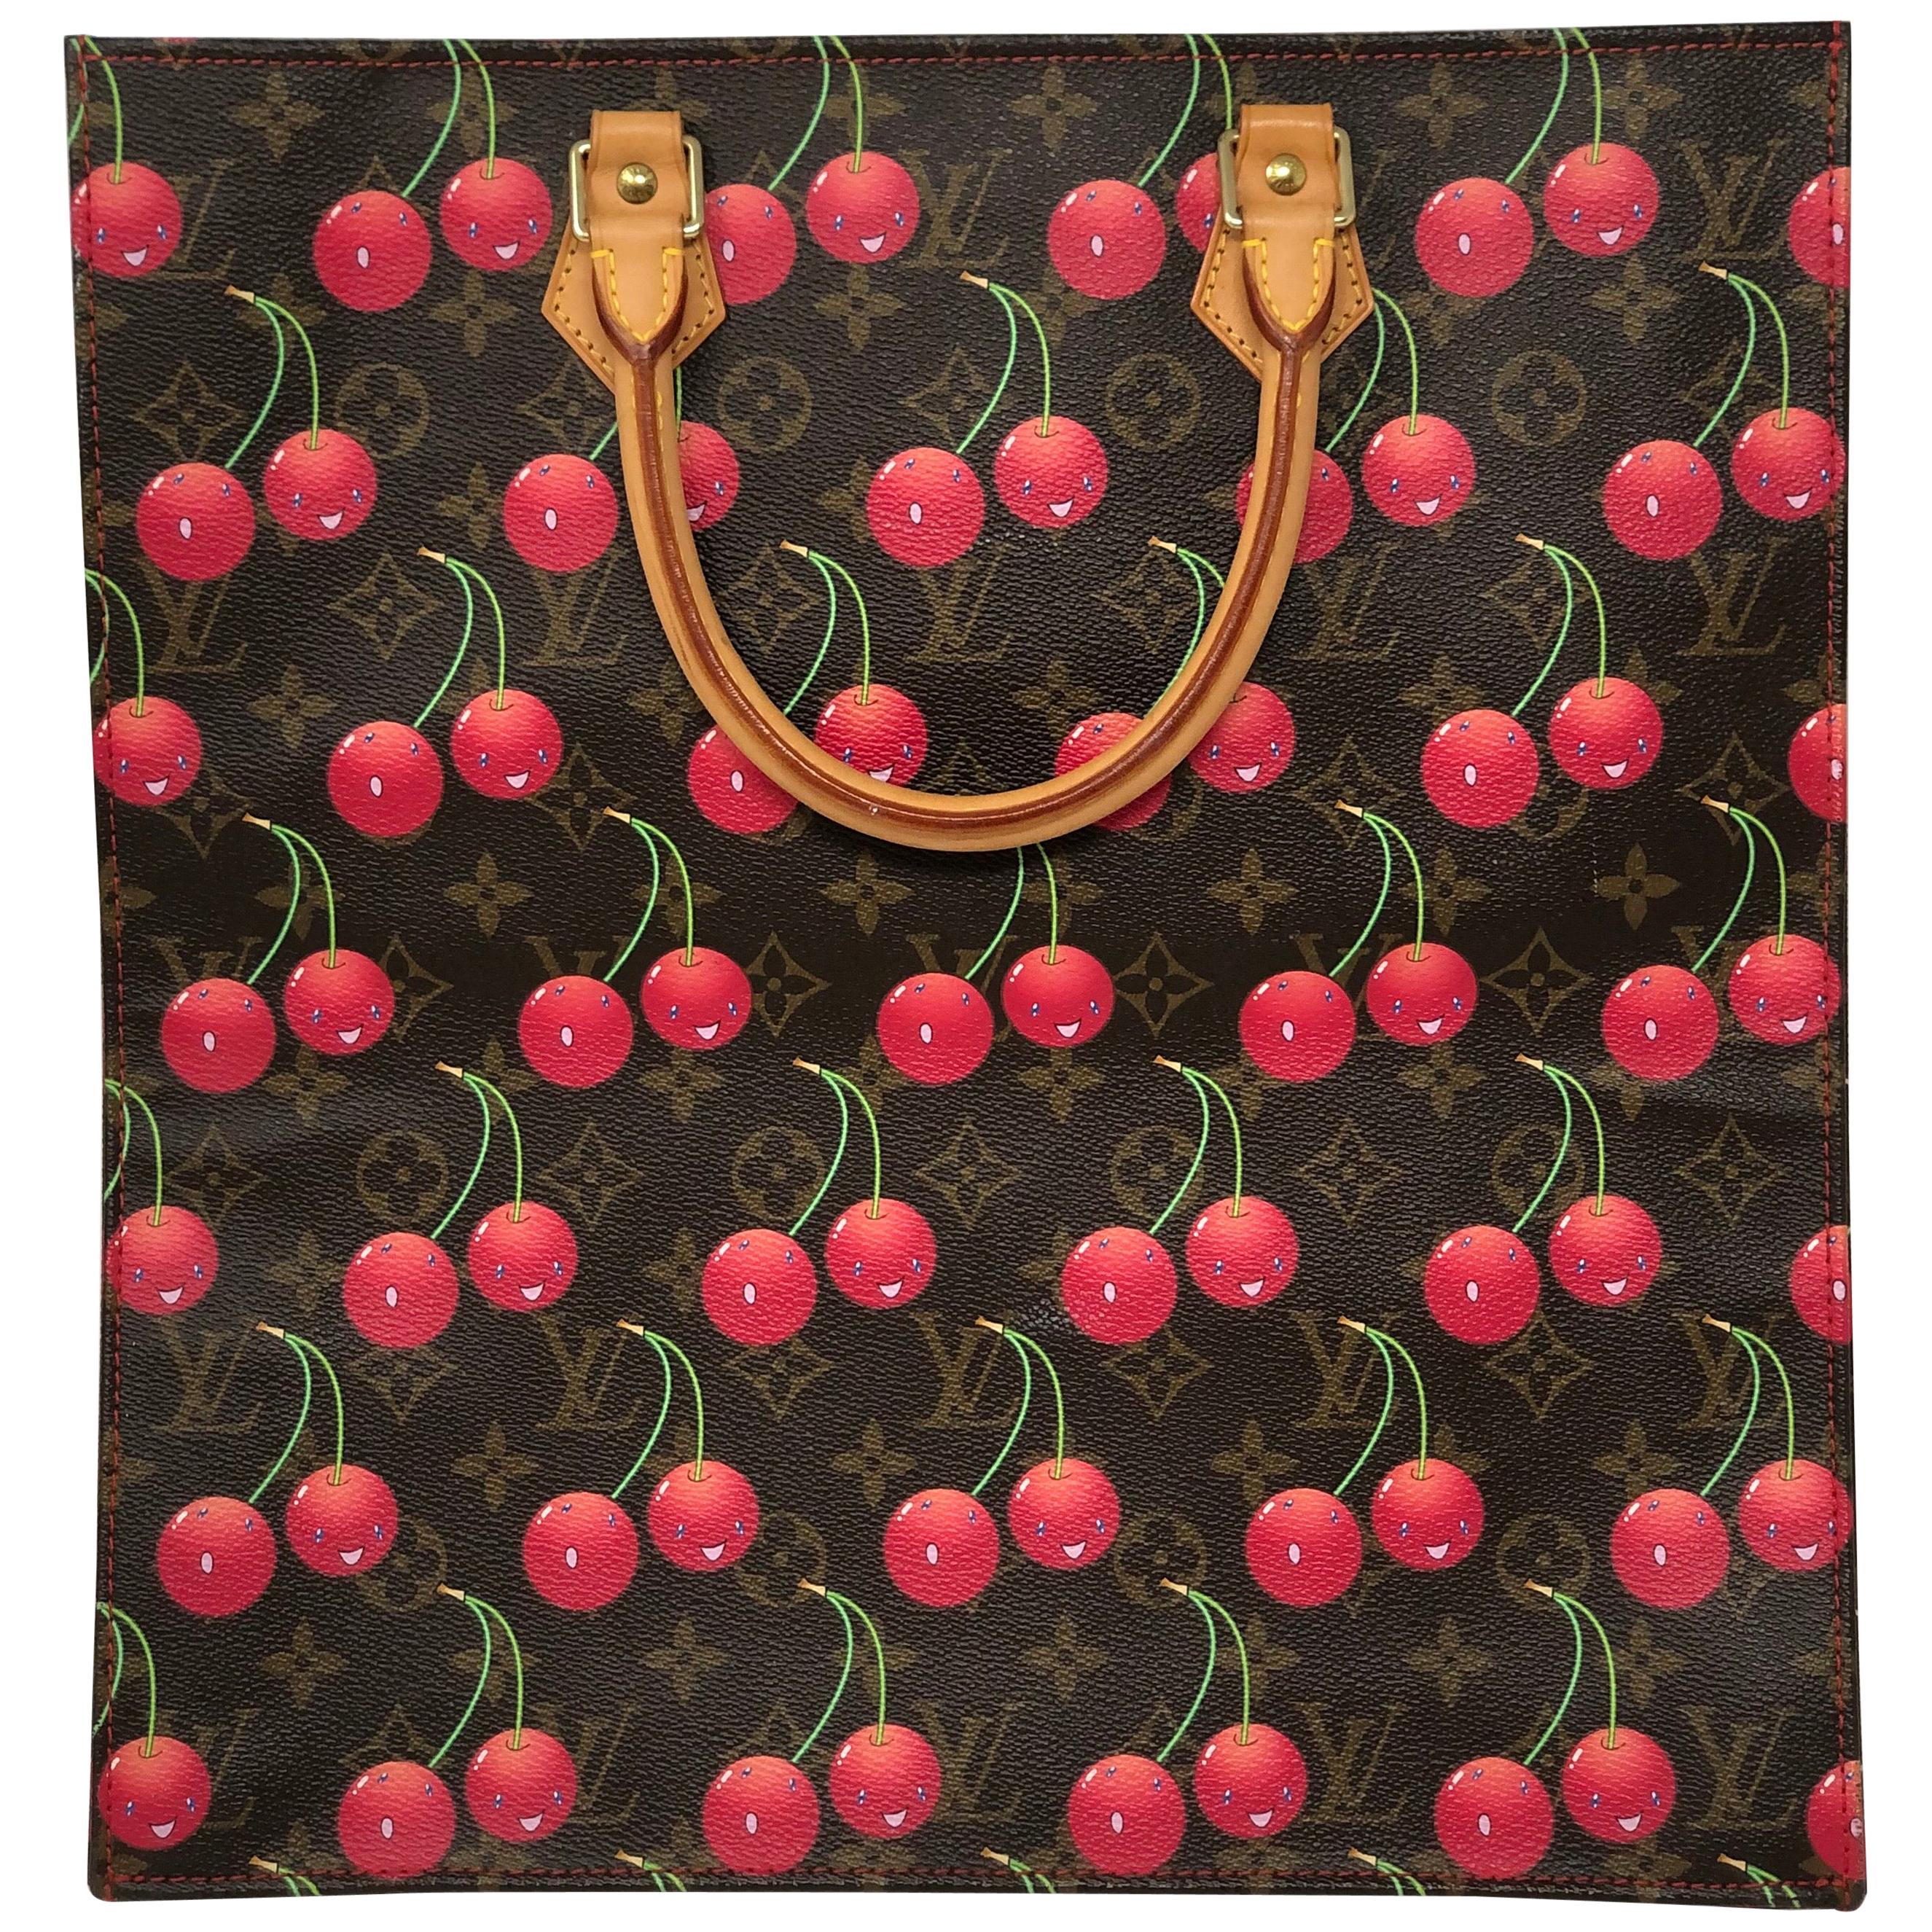 LOUIS VUITTON MONOGRAM Cherry SAC PLAT Handbag Tote Bag #45 Rise